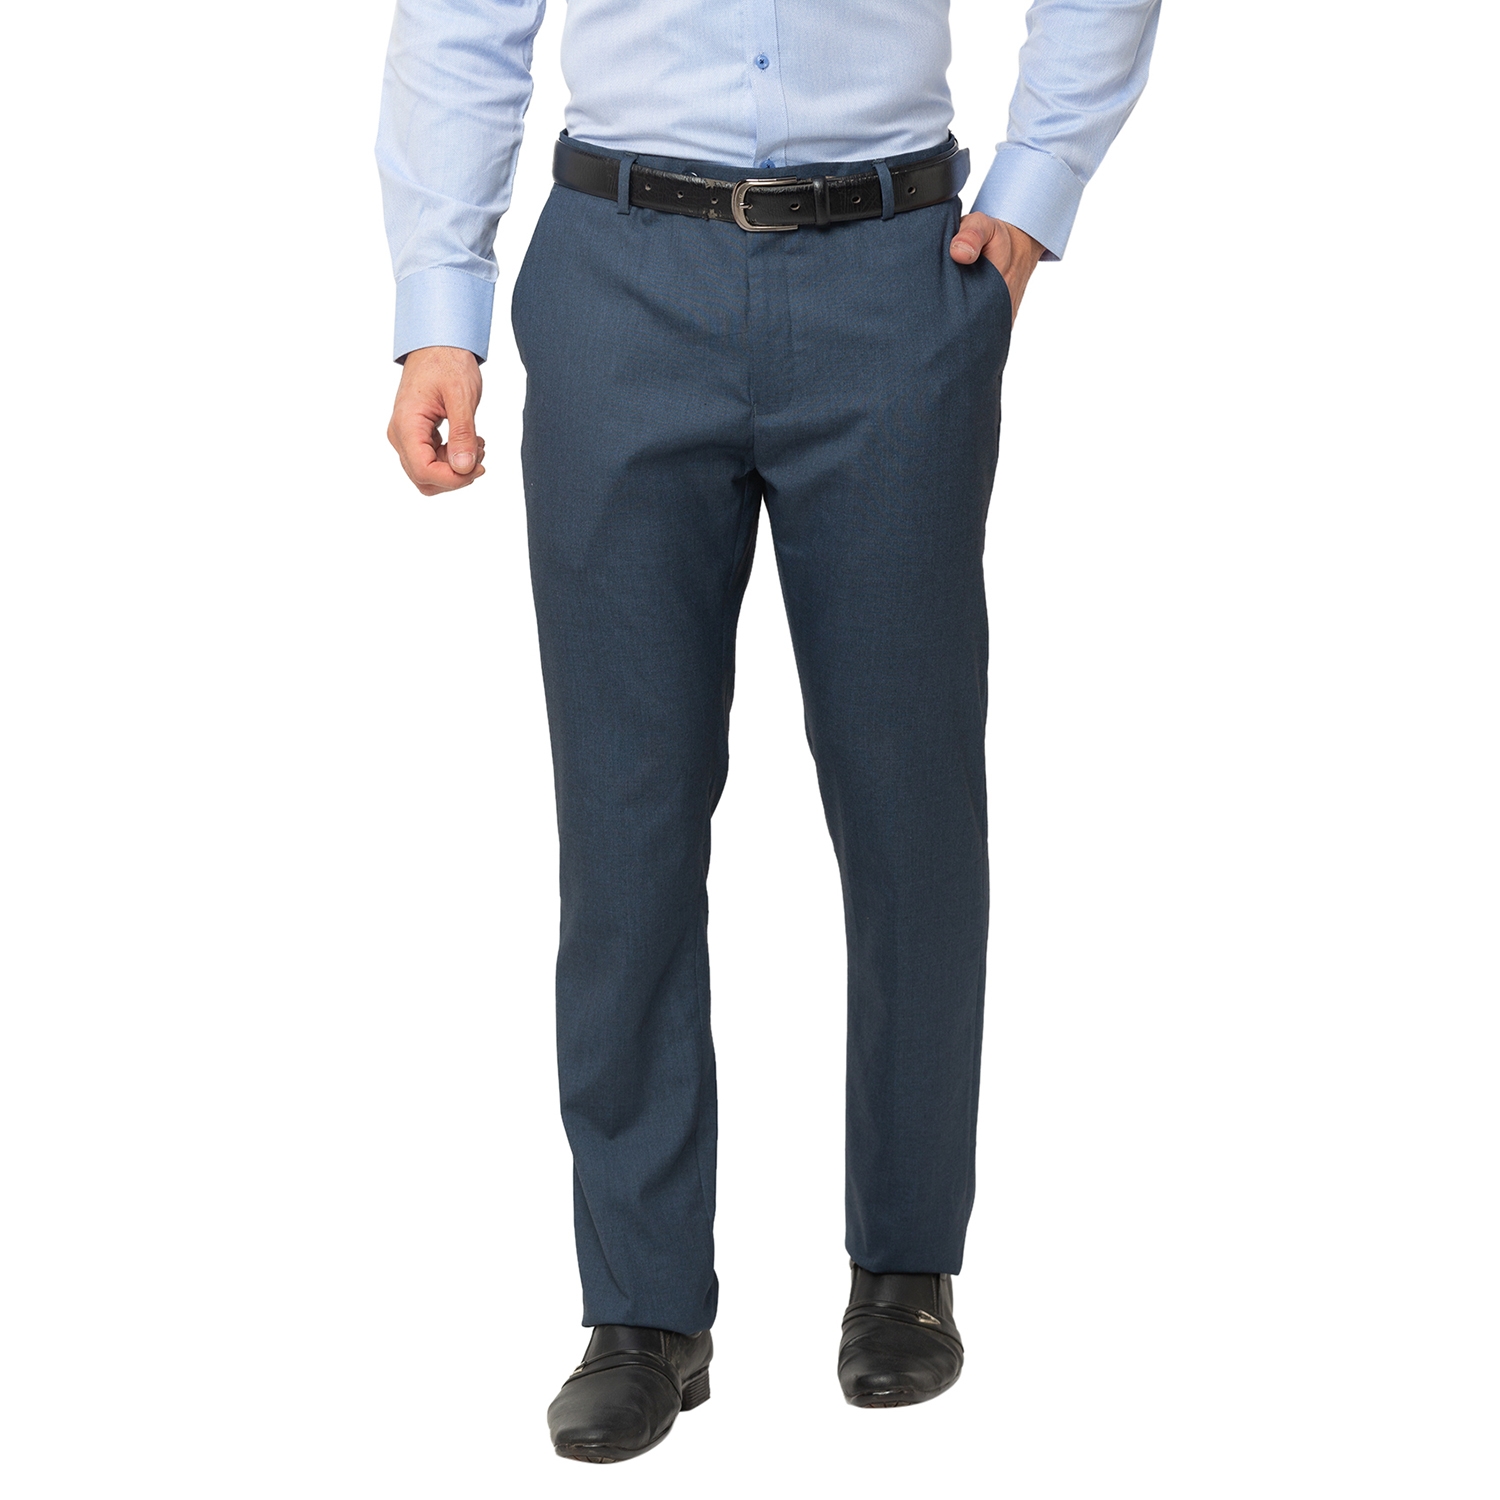 globus | Men's Blue Cotton Blend Solid Formal Trousers 0